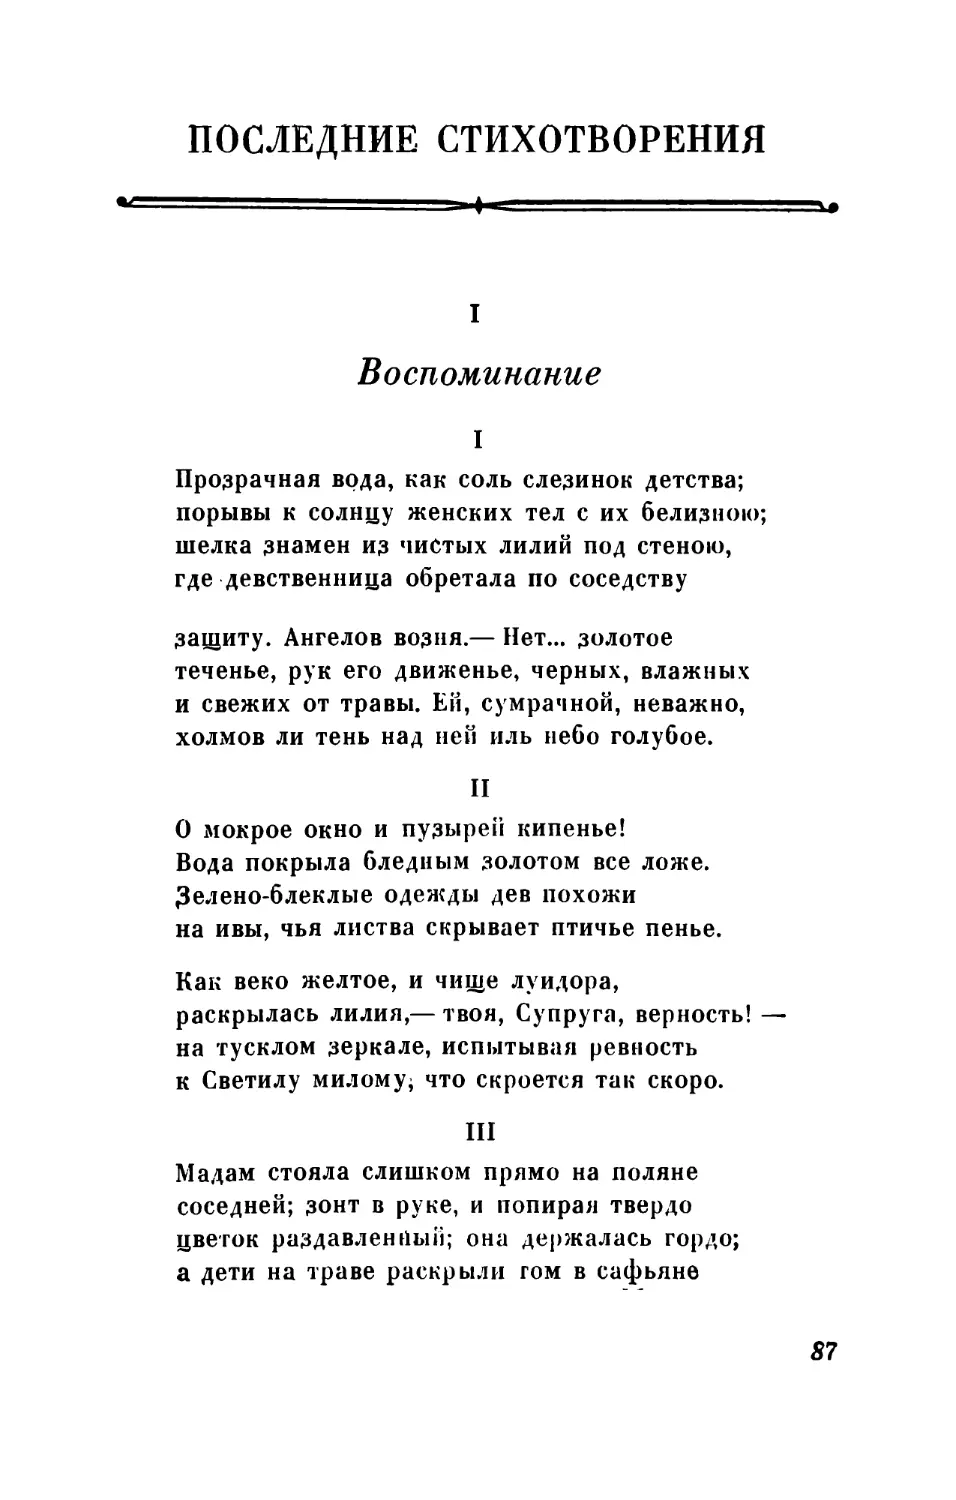 Последние стихотворения [1872]